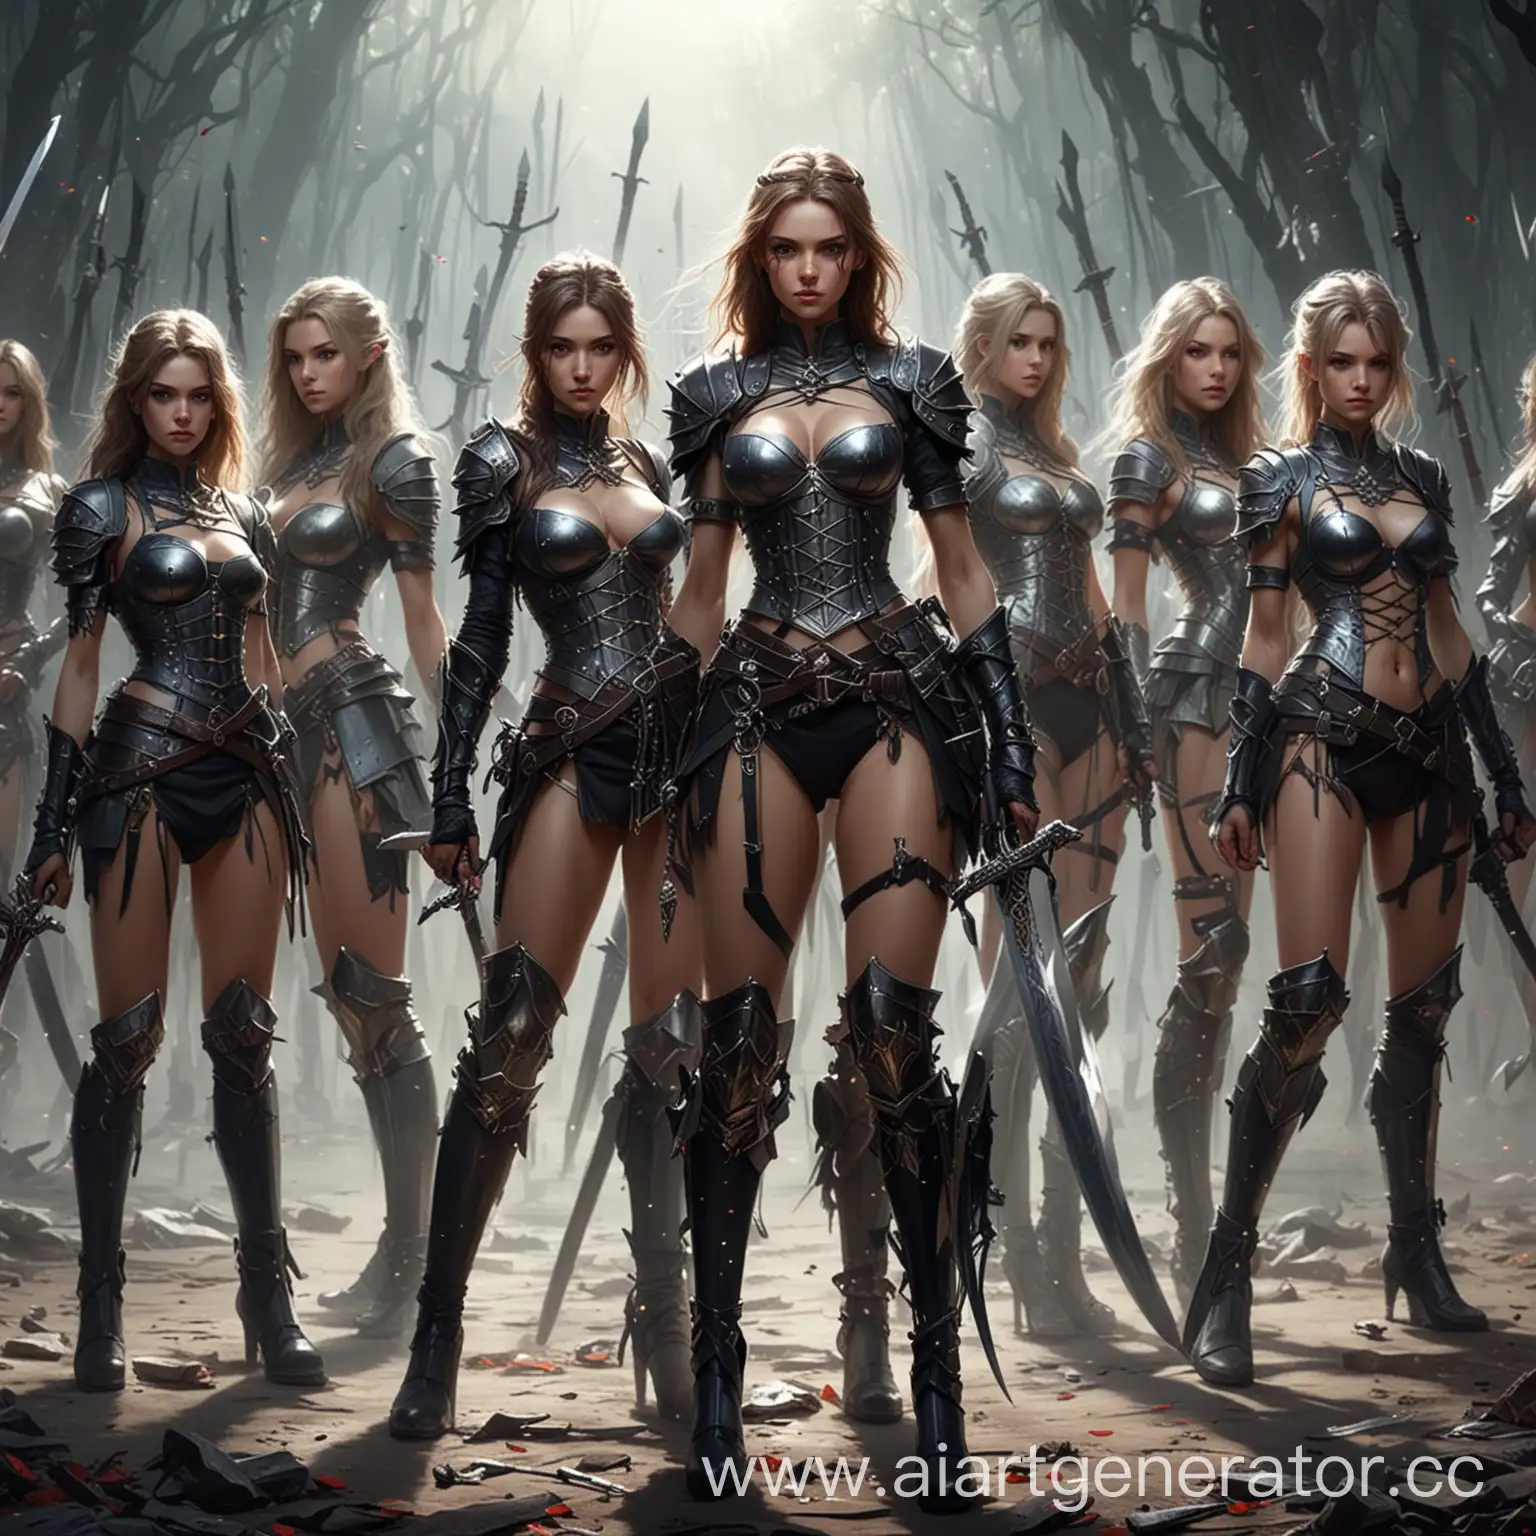 Армия девушек в стиле фэнтези с мечами